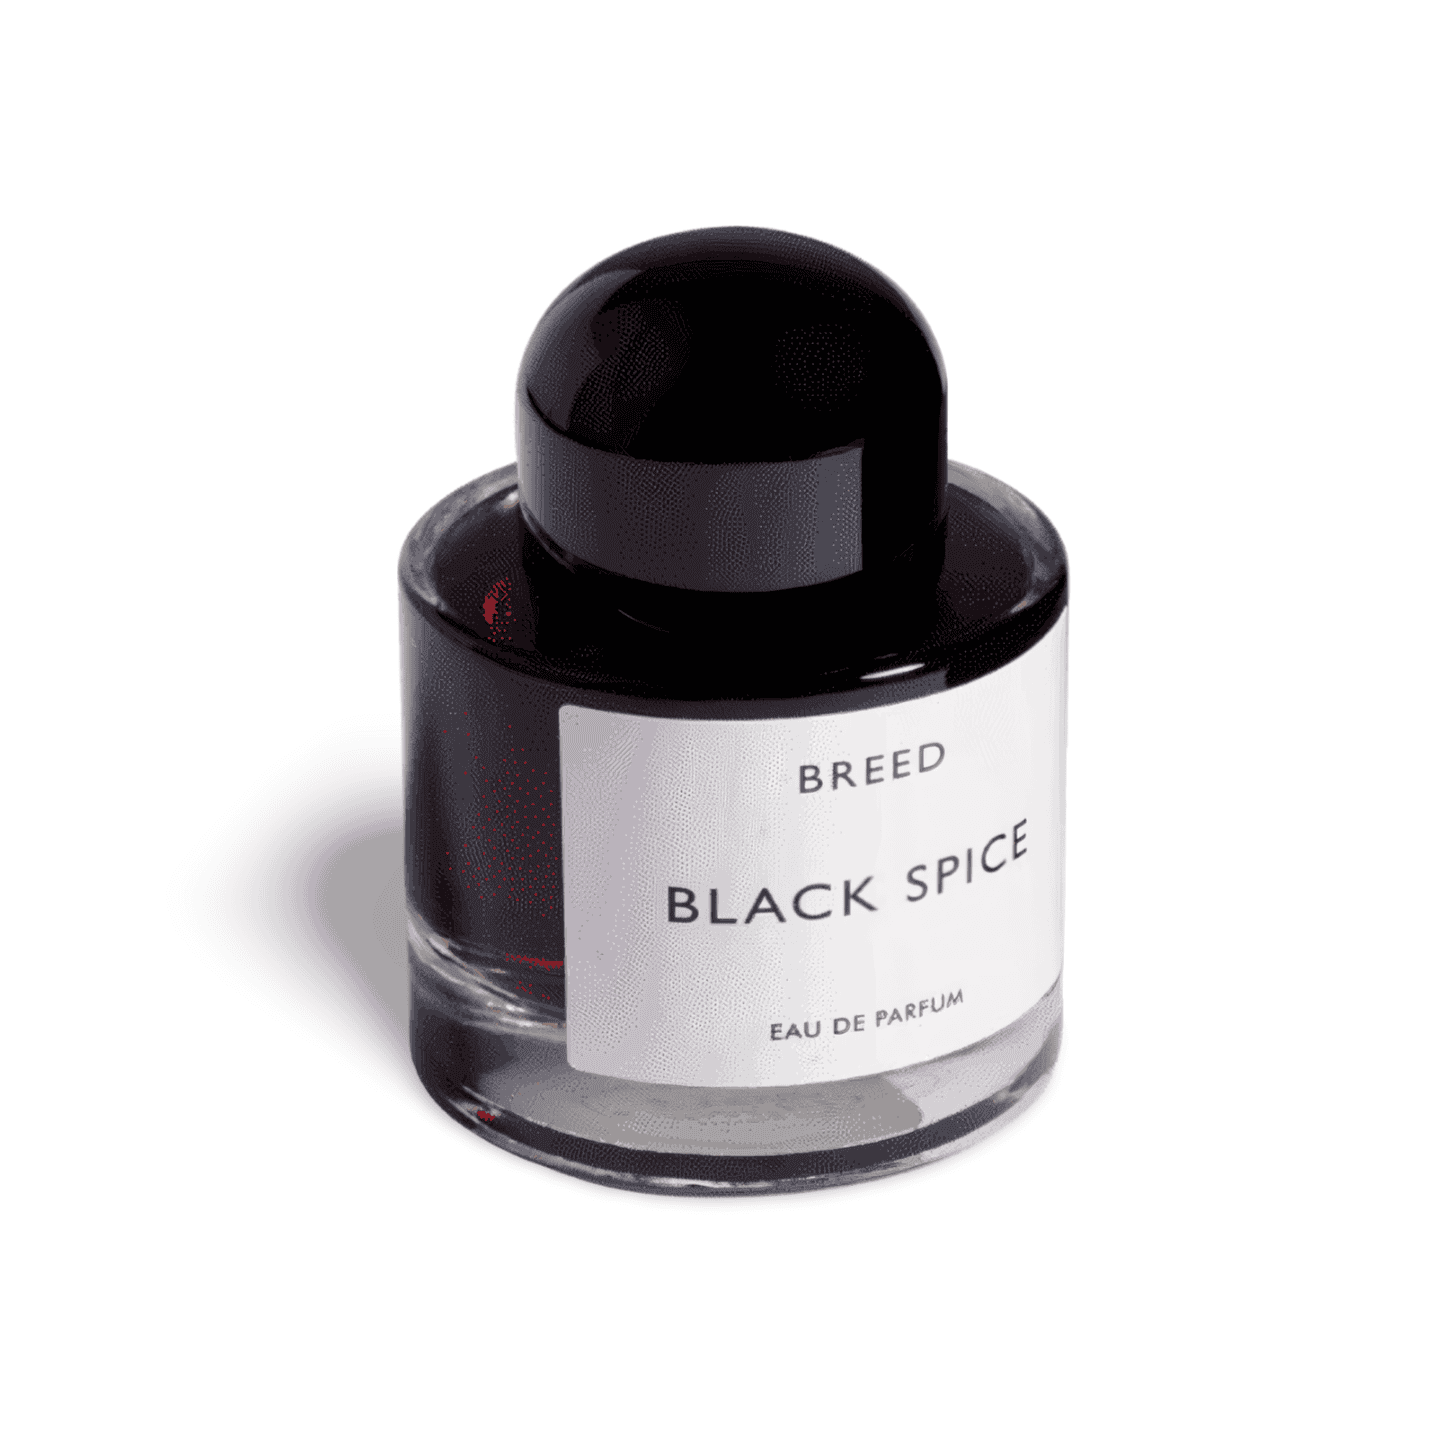 Breed Black Spice EDP Perfume